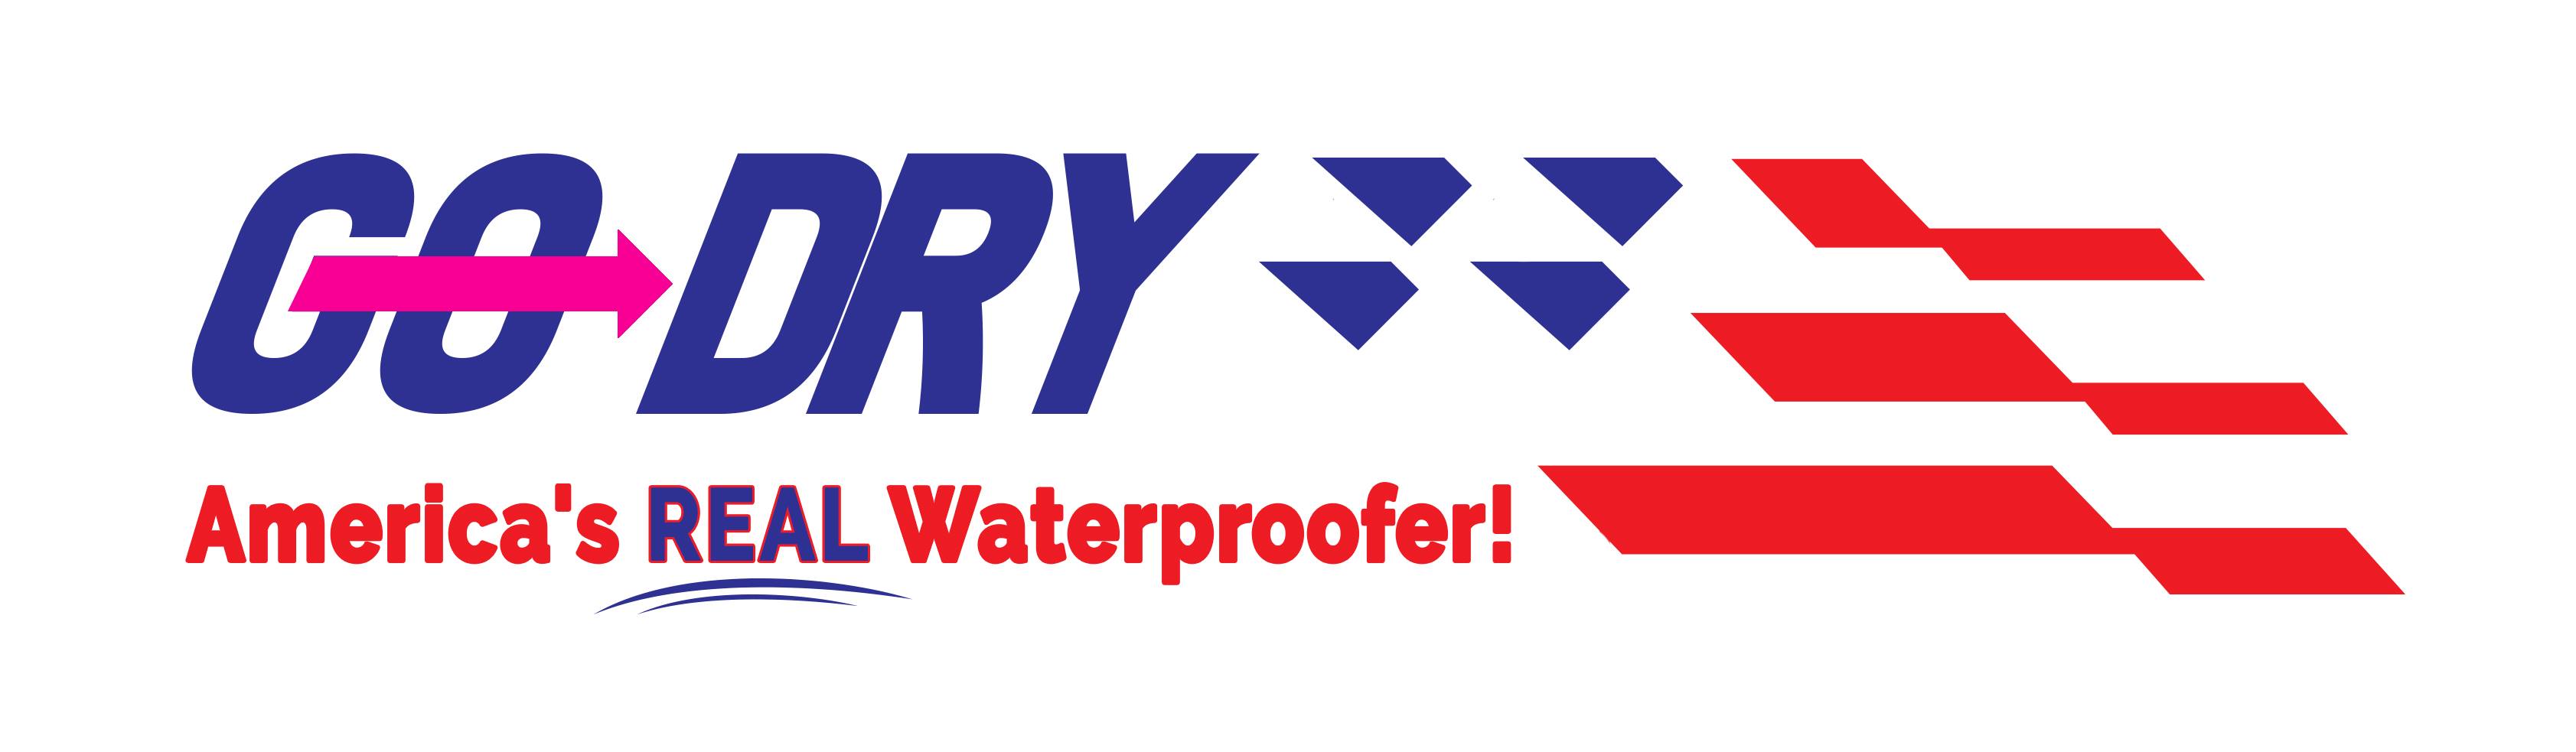 Go Dry Waterproofing logo